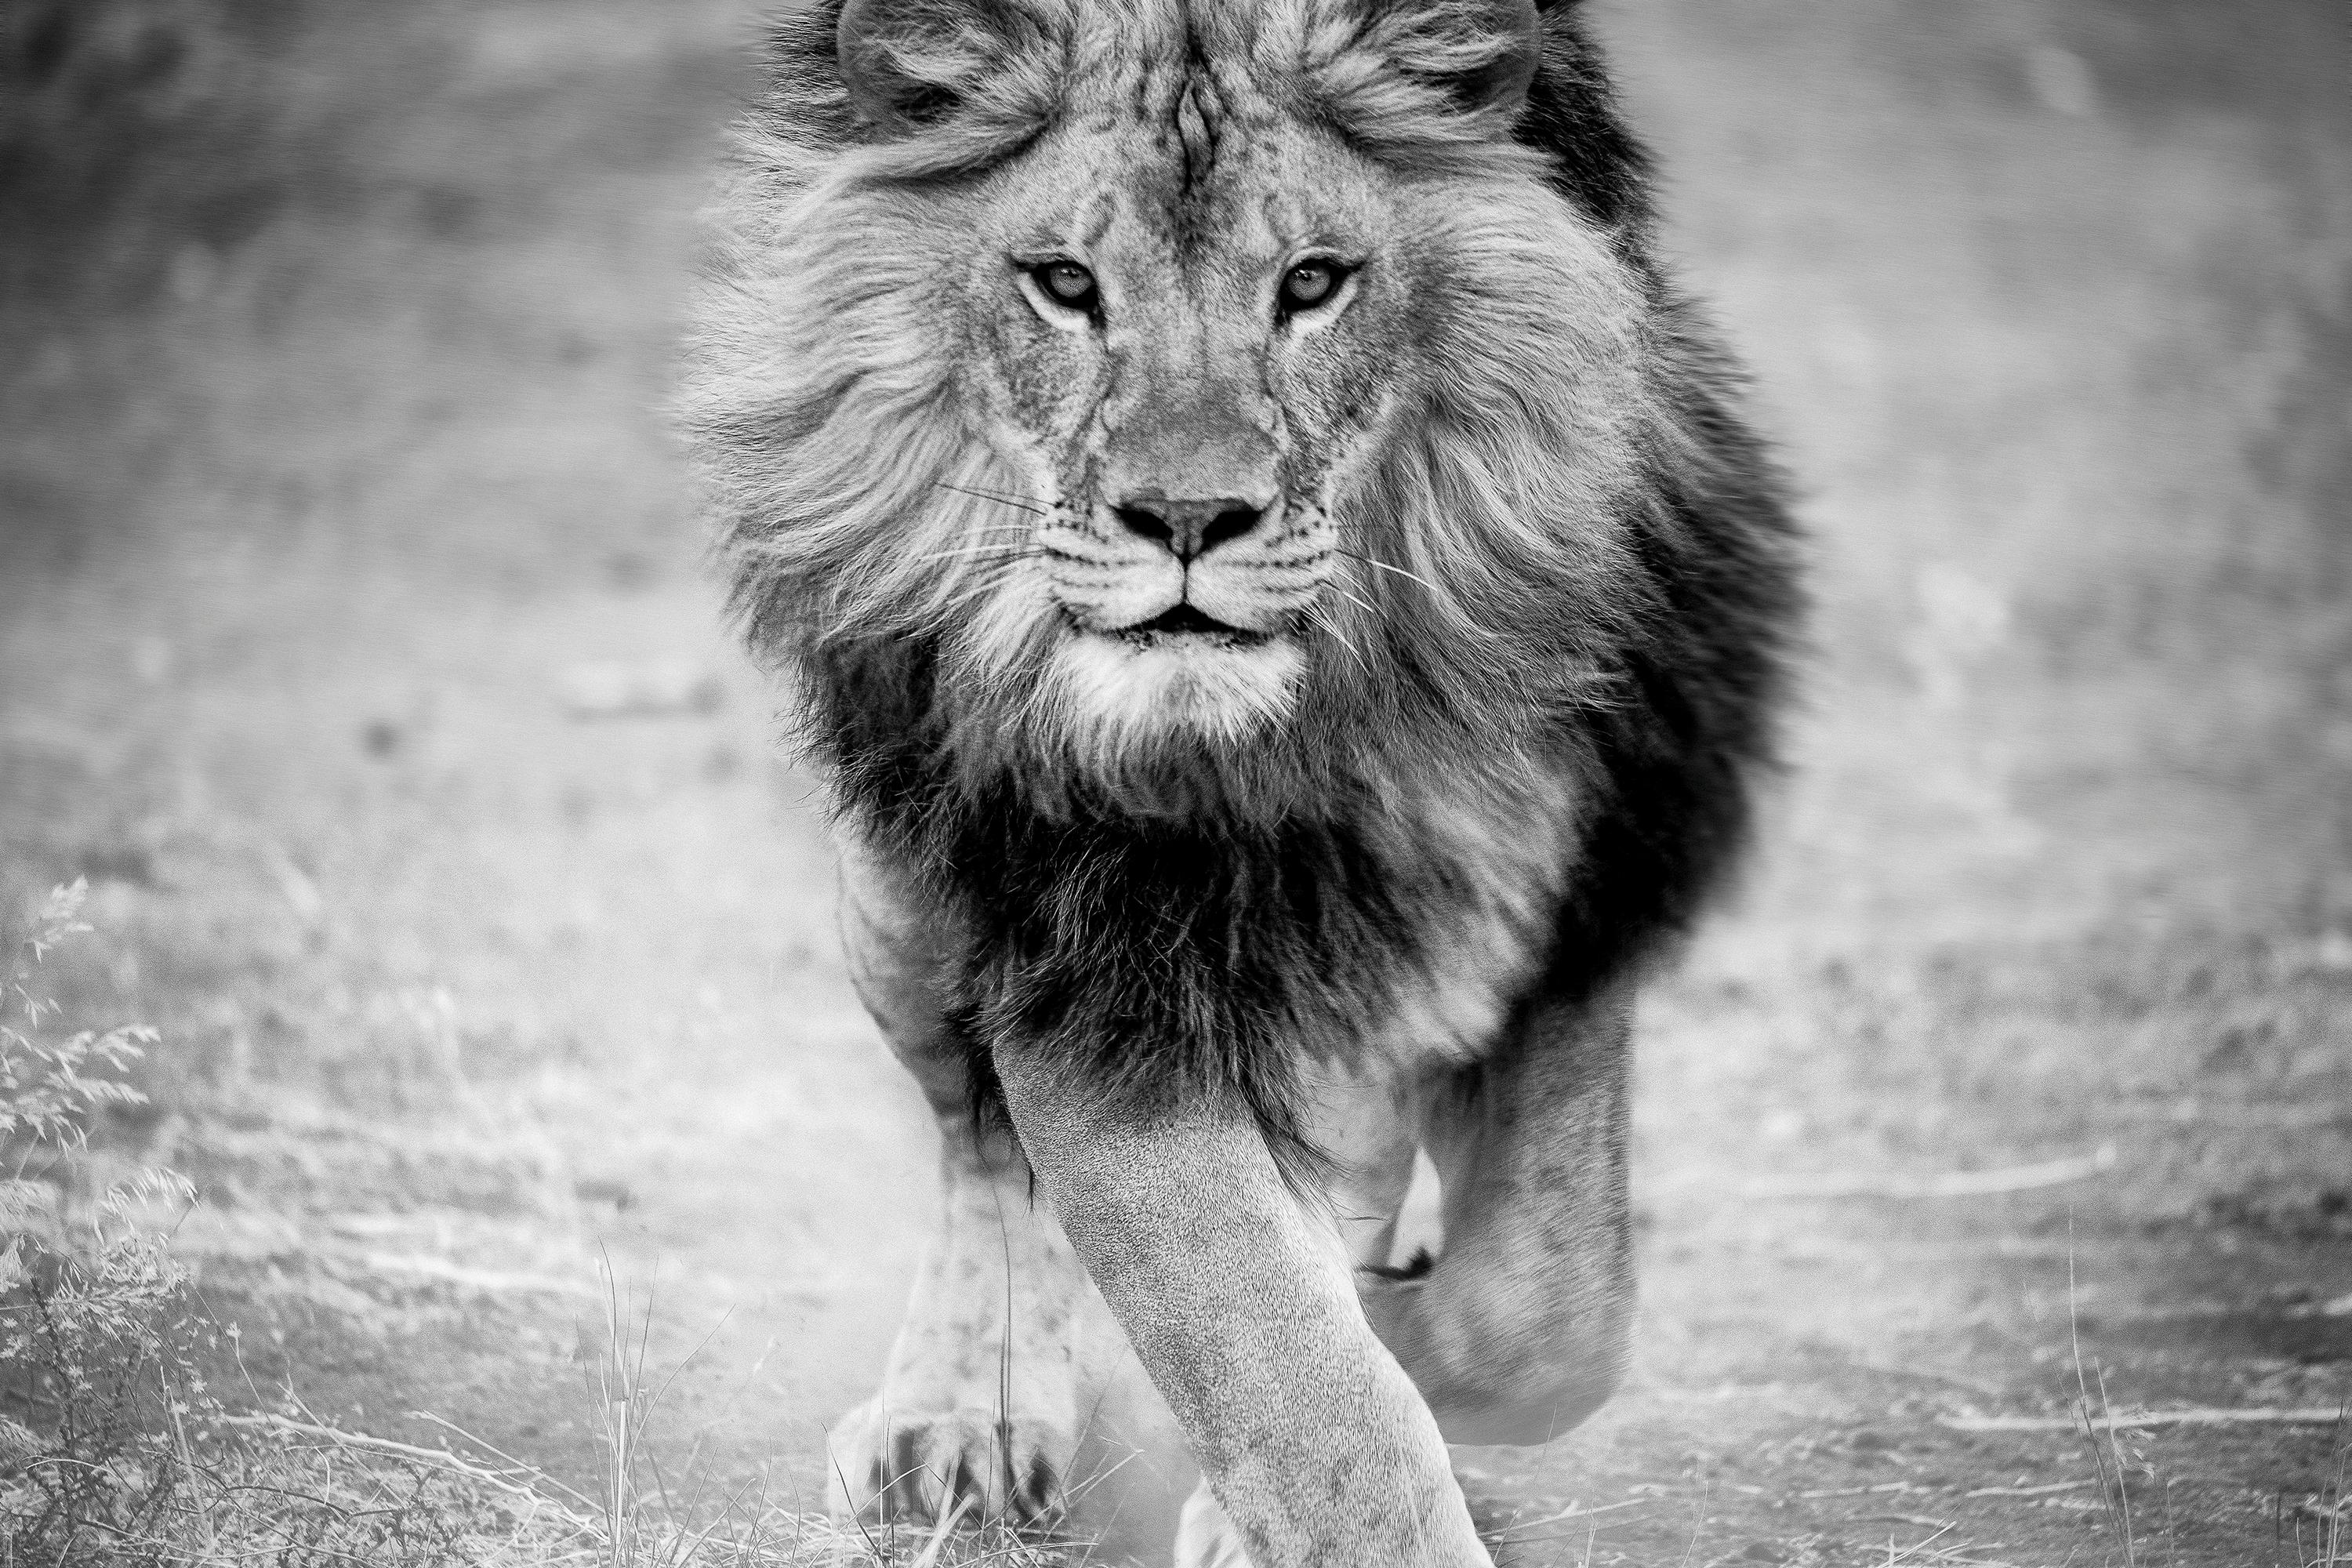 Shane Russeck Animal Print -  "Panthera Leo" 36x48 Black and White Lion Photography Photograph Fine Art Print